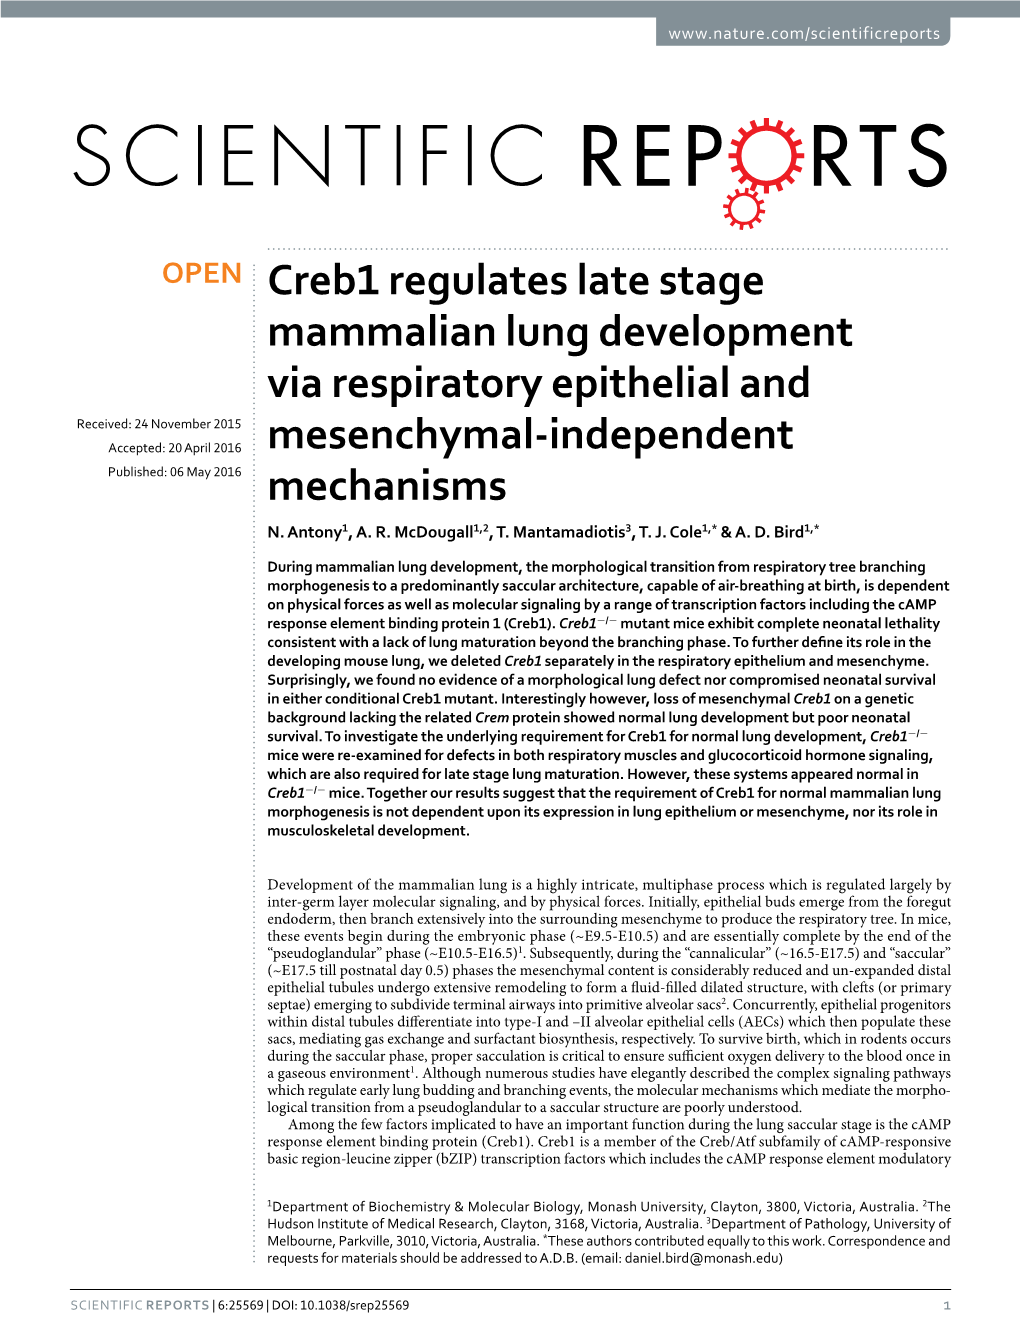 Creb1 Regulates Late Stage Mammalian Lung